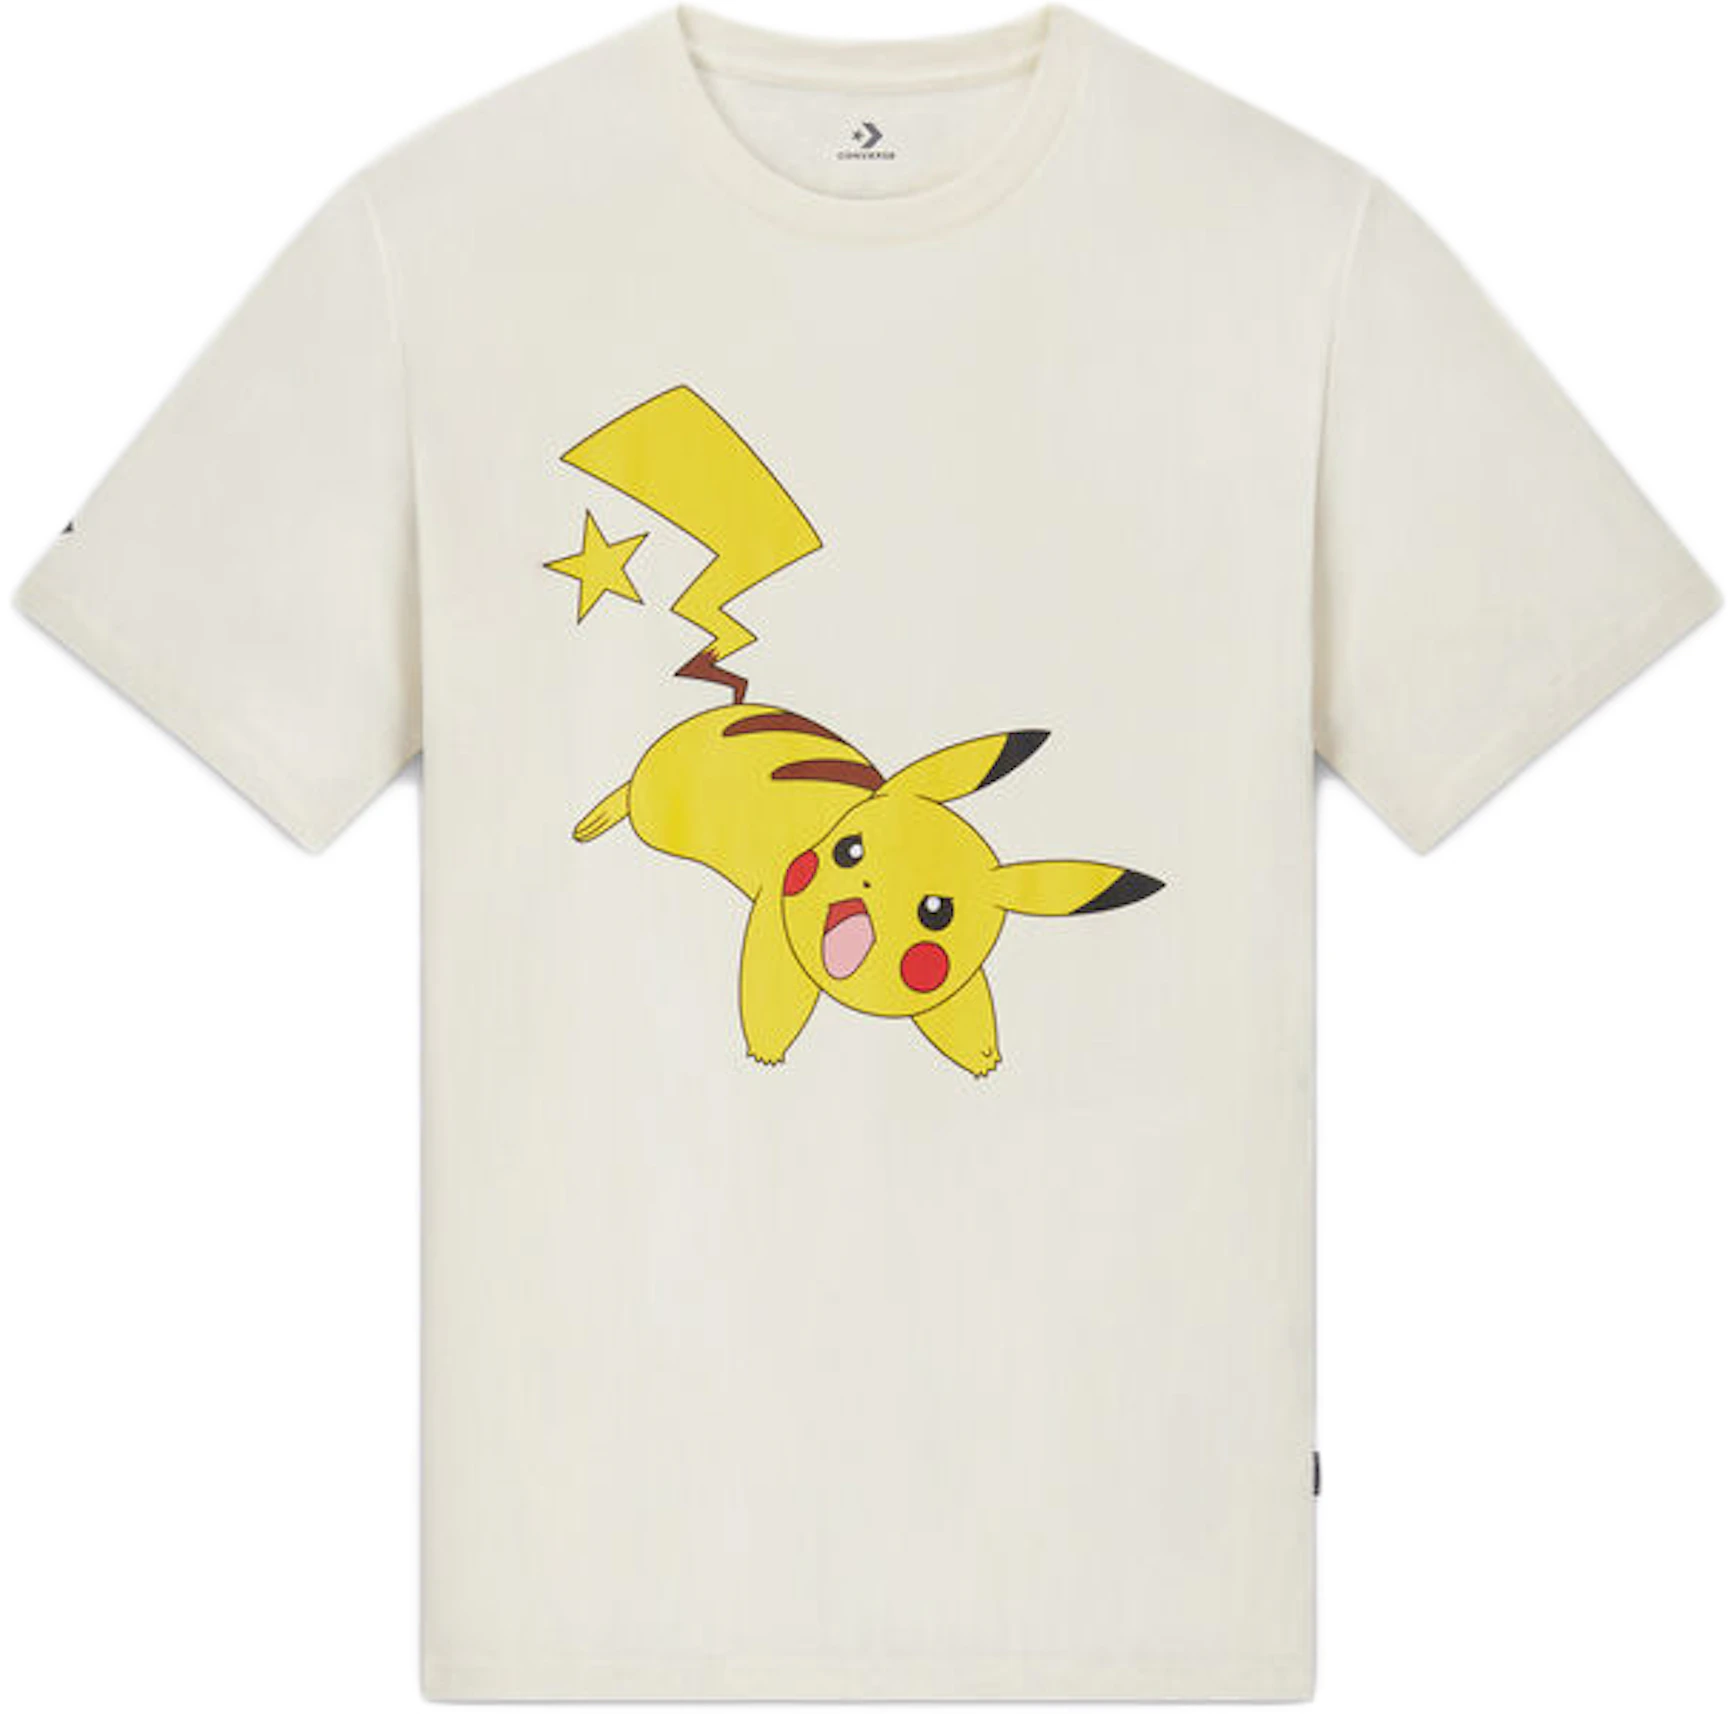 Optimismo Molester Llanura Converse x Pokemon Pikachu T-Shirt White - FW21 - ES